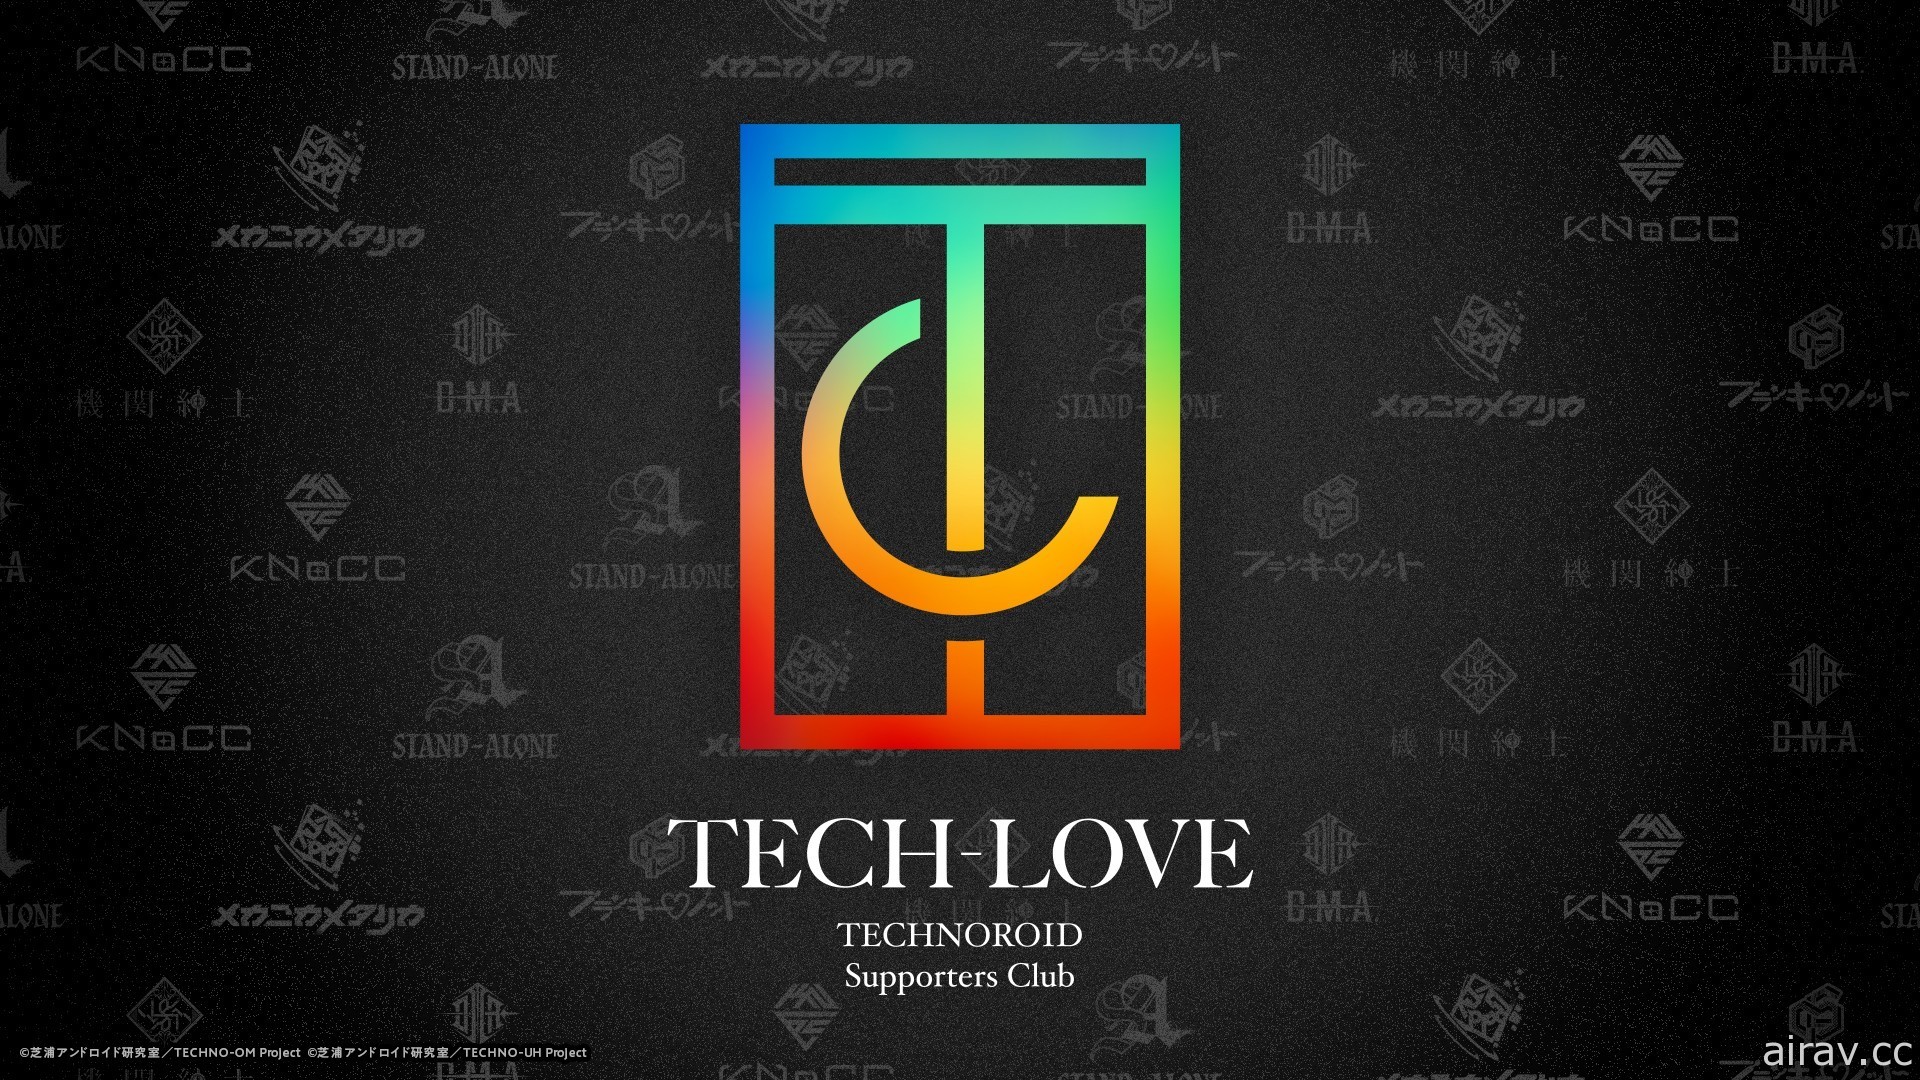 《Techno-Roid UNISON HEART》公布上市日期　STAND-ALONE 新歌今晚首播